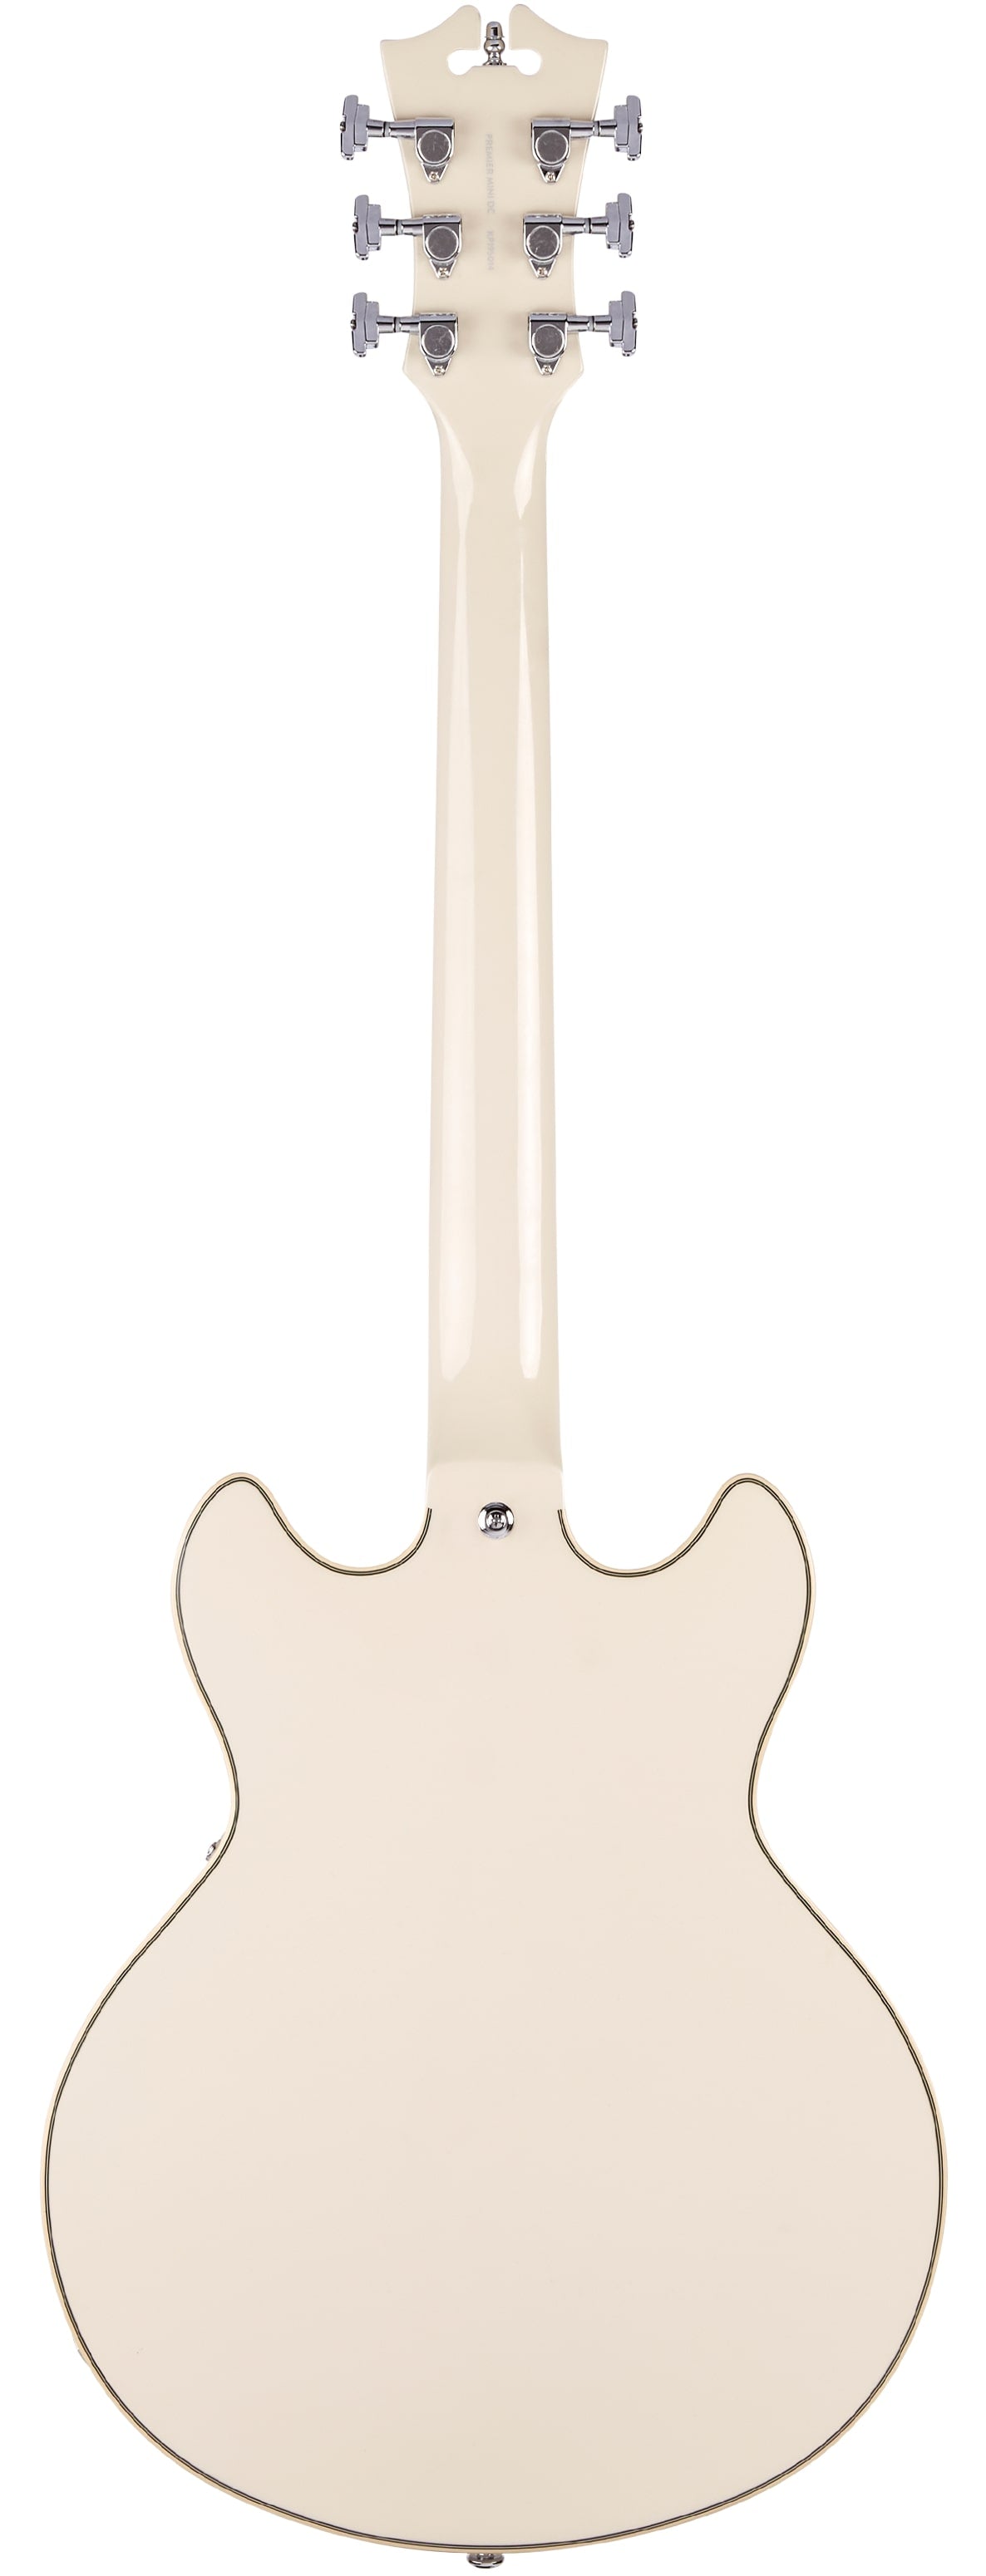 D'Angelico Premier Mini DC Semi-hollowbody Electric Guitar, Champagne DAPMINIDCCMPCSCB